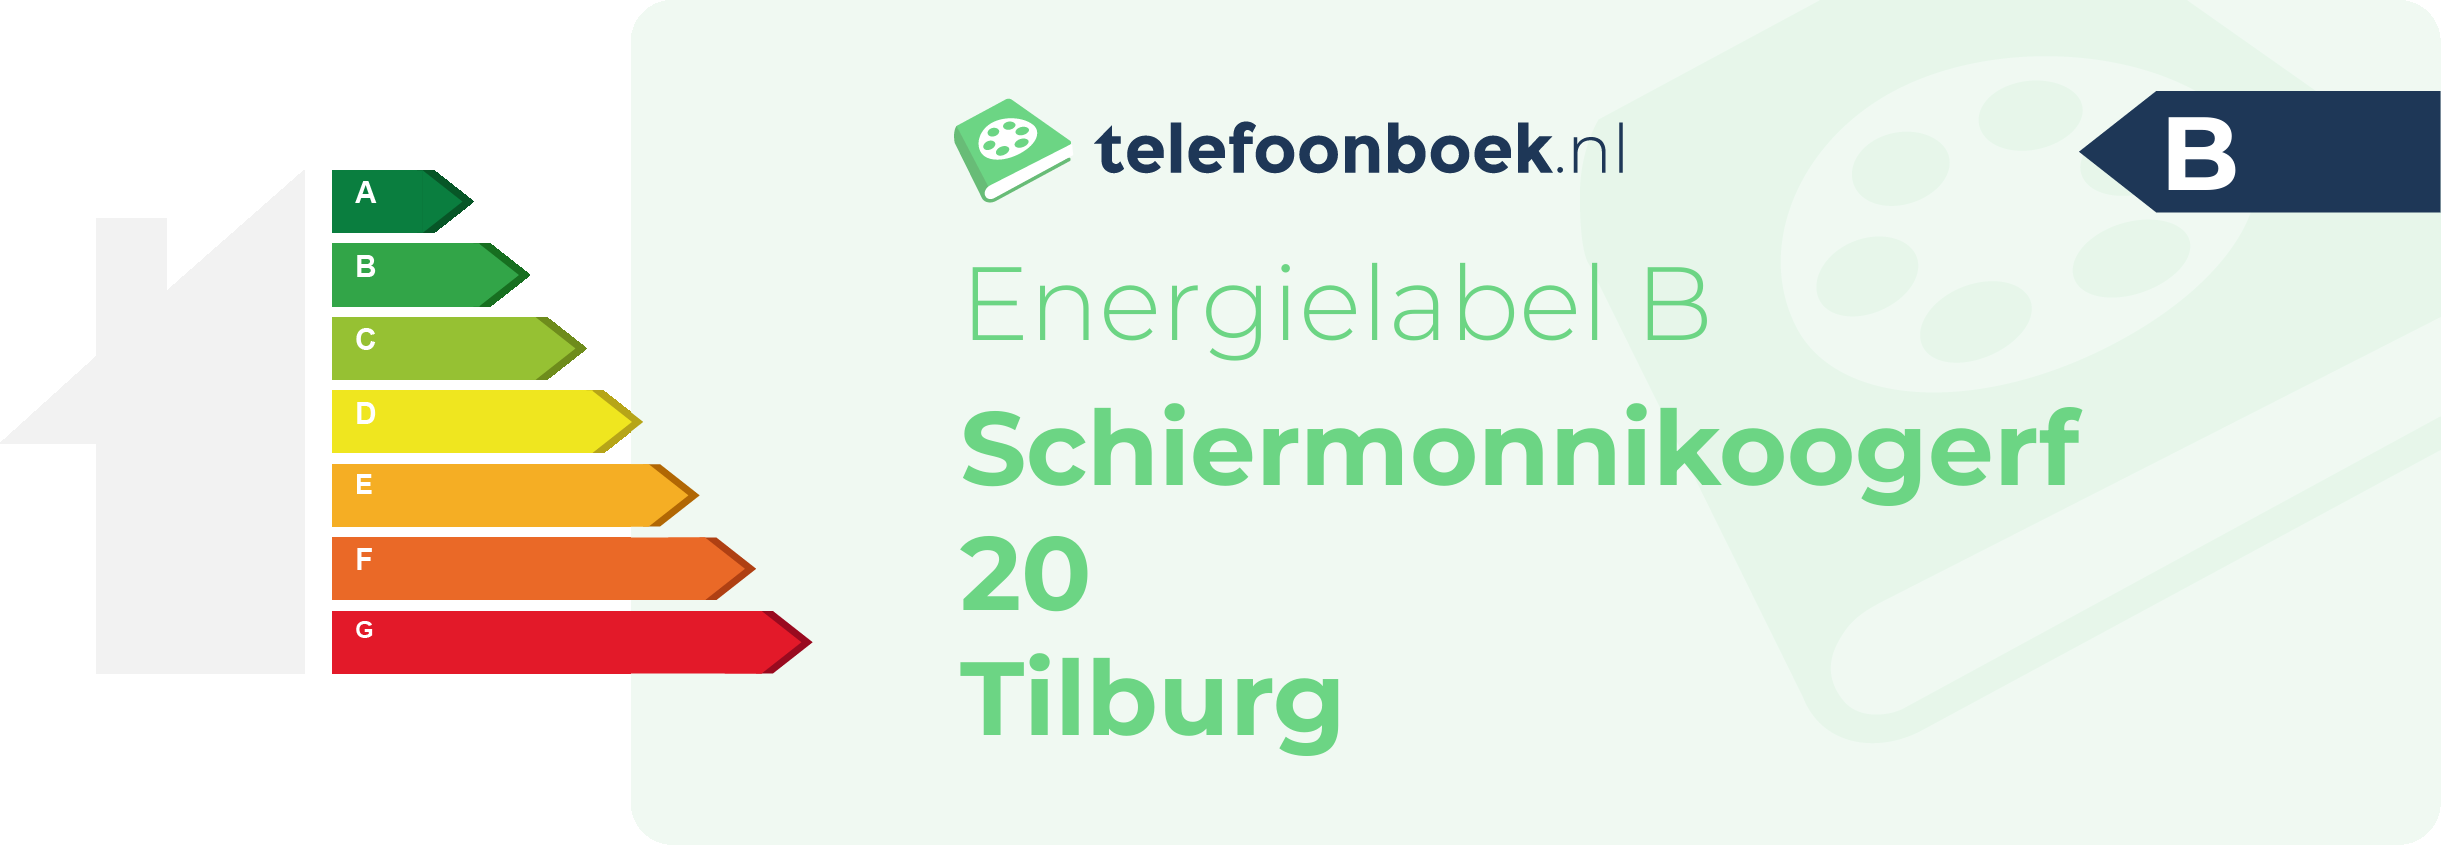 Energielabel Schiermonnikoogerf 20 Tilburg